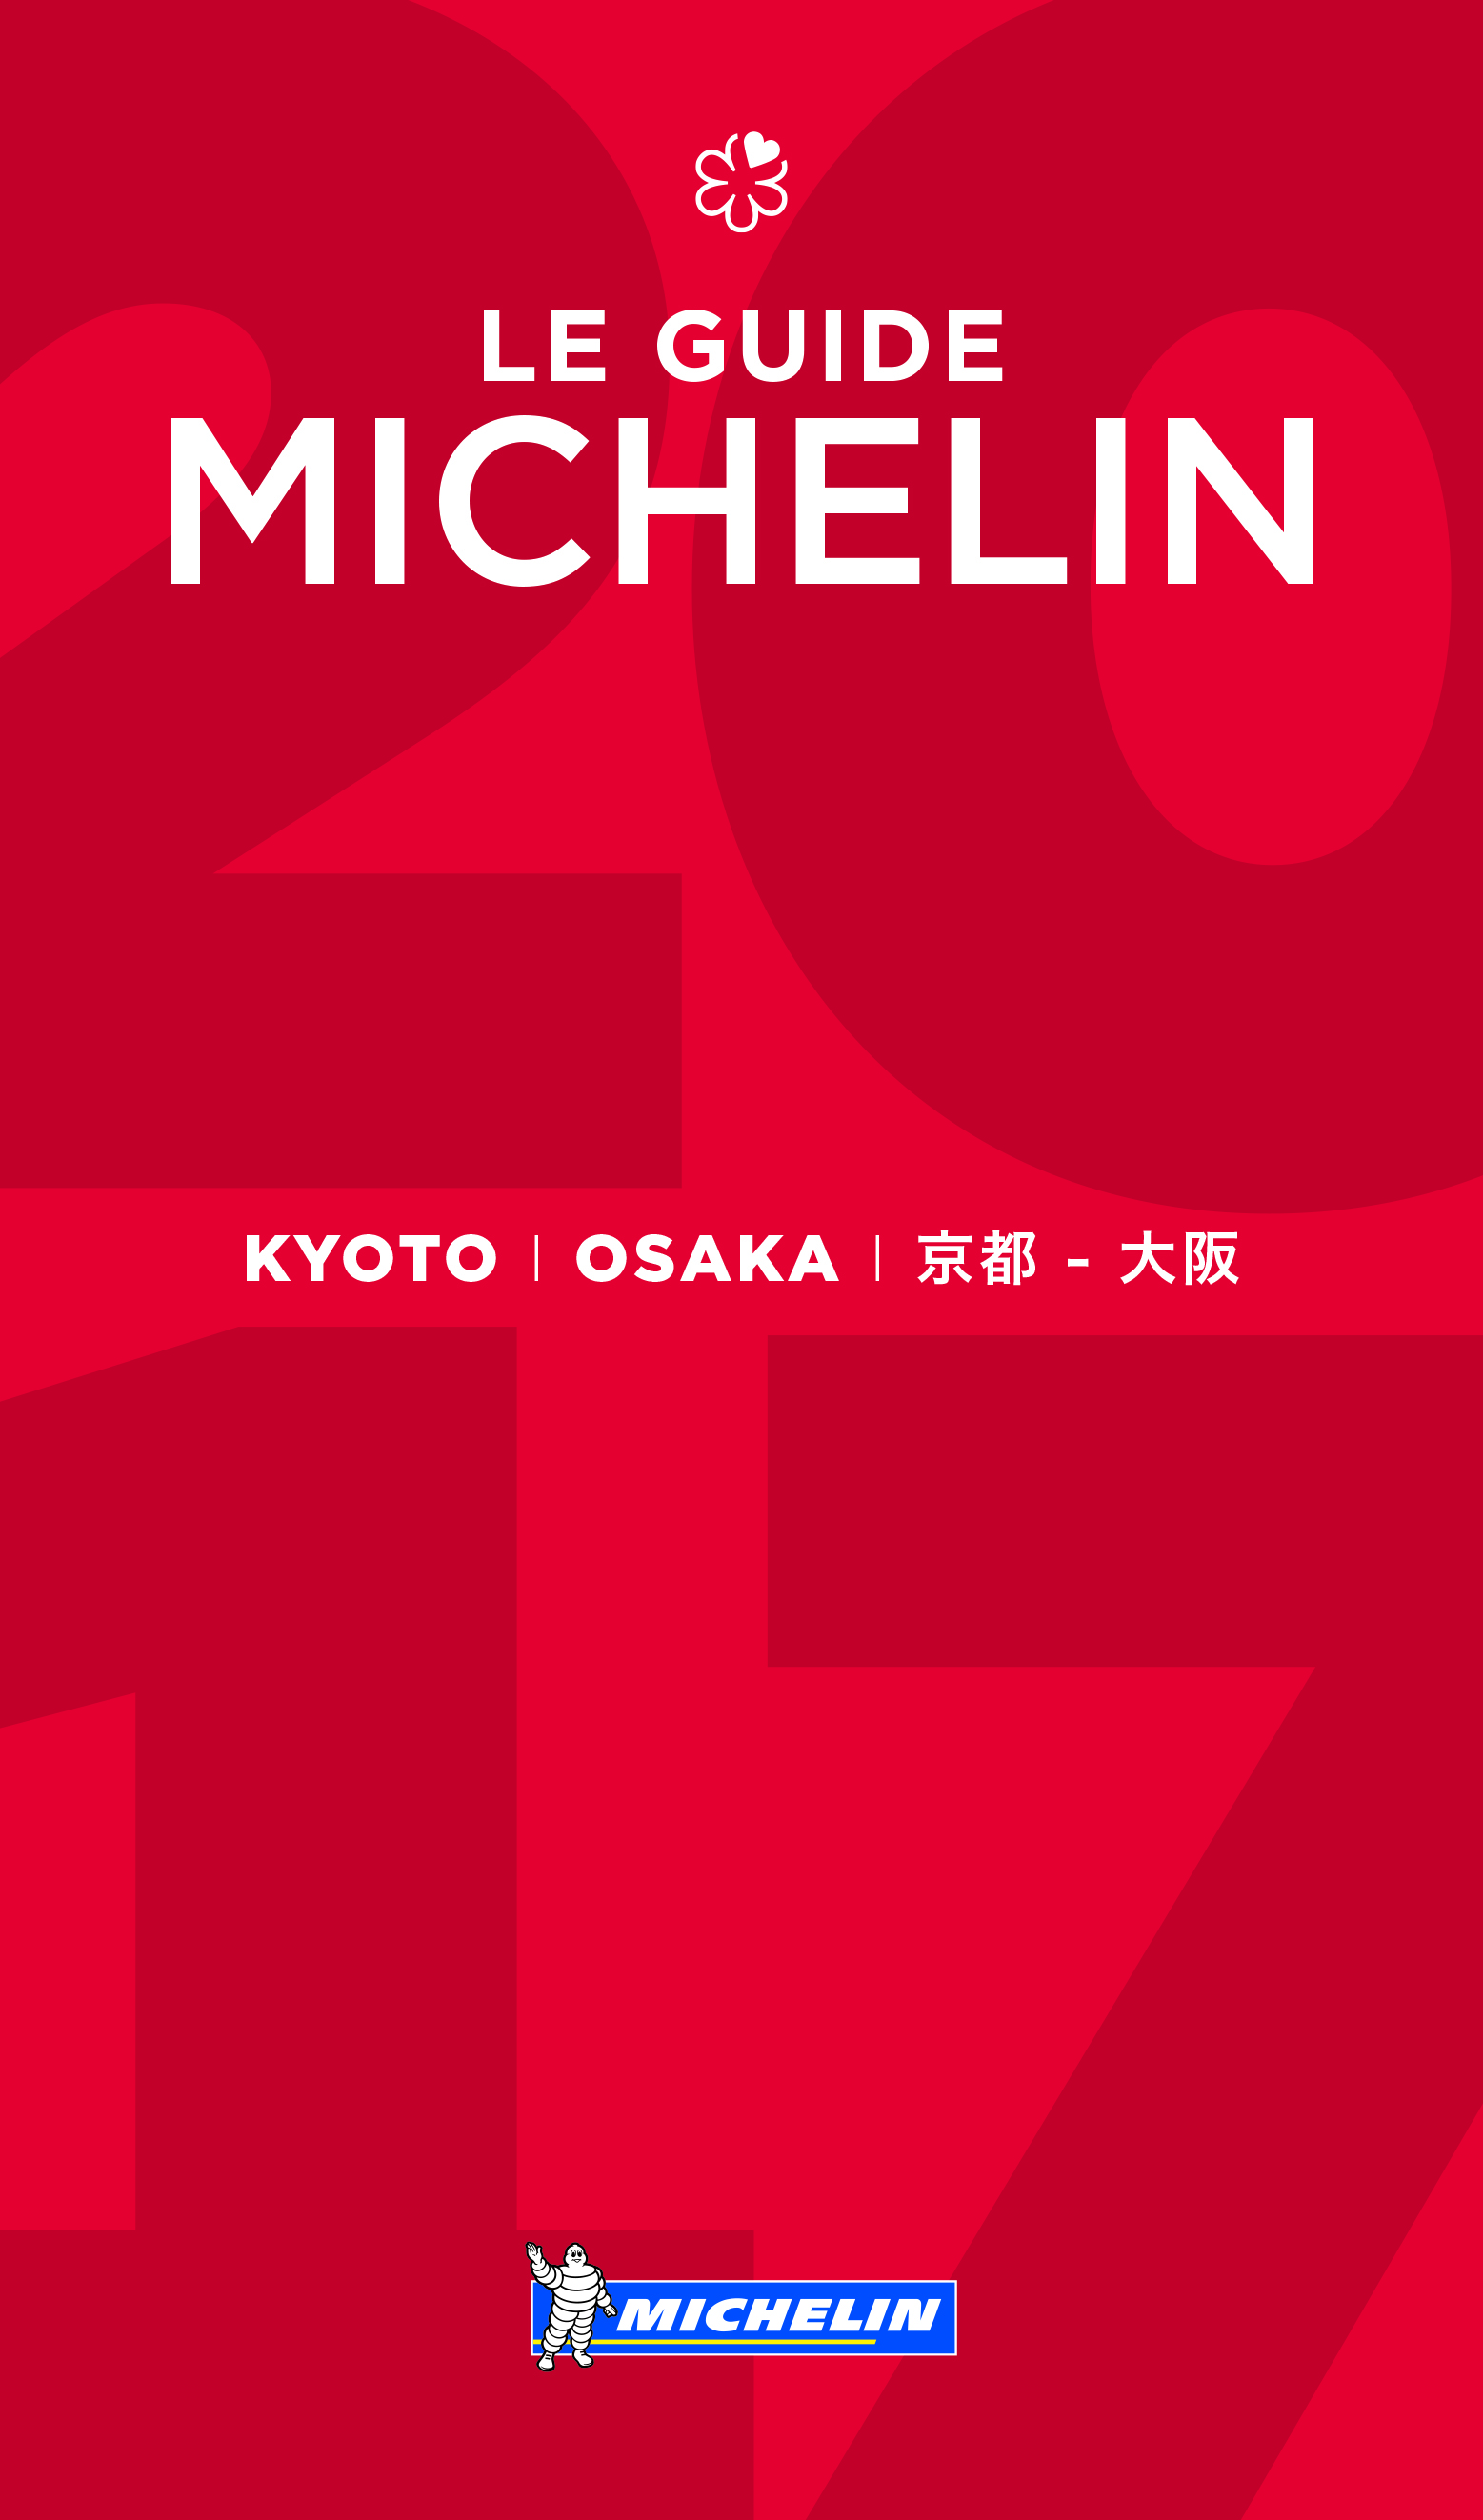 La guía MICHELIN Kyoto Osaka 2017